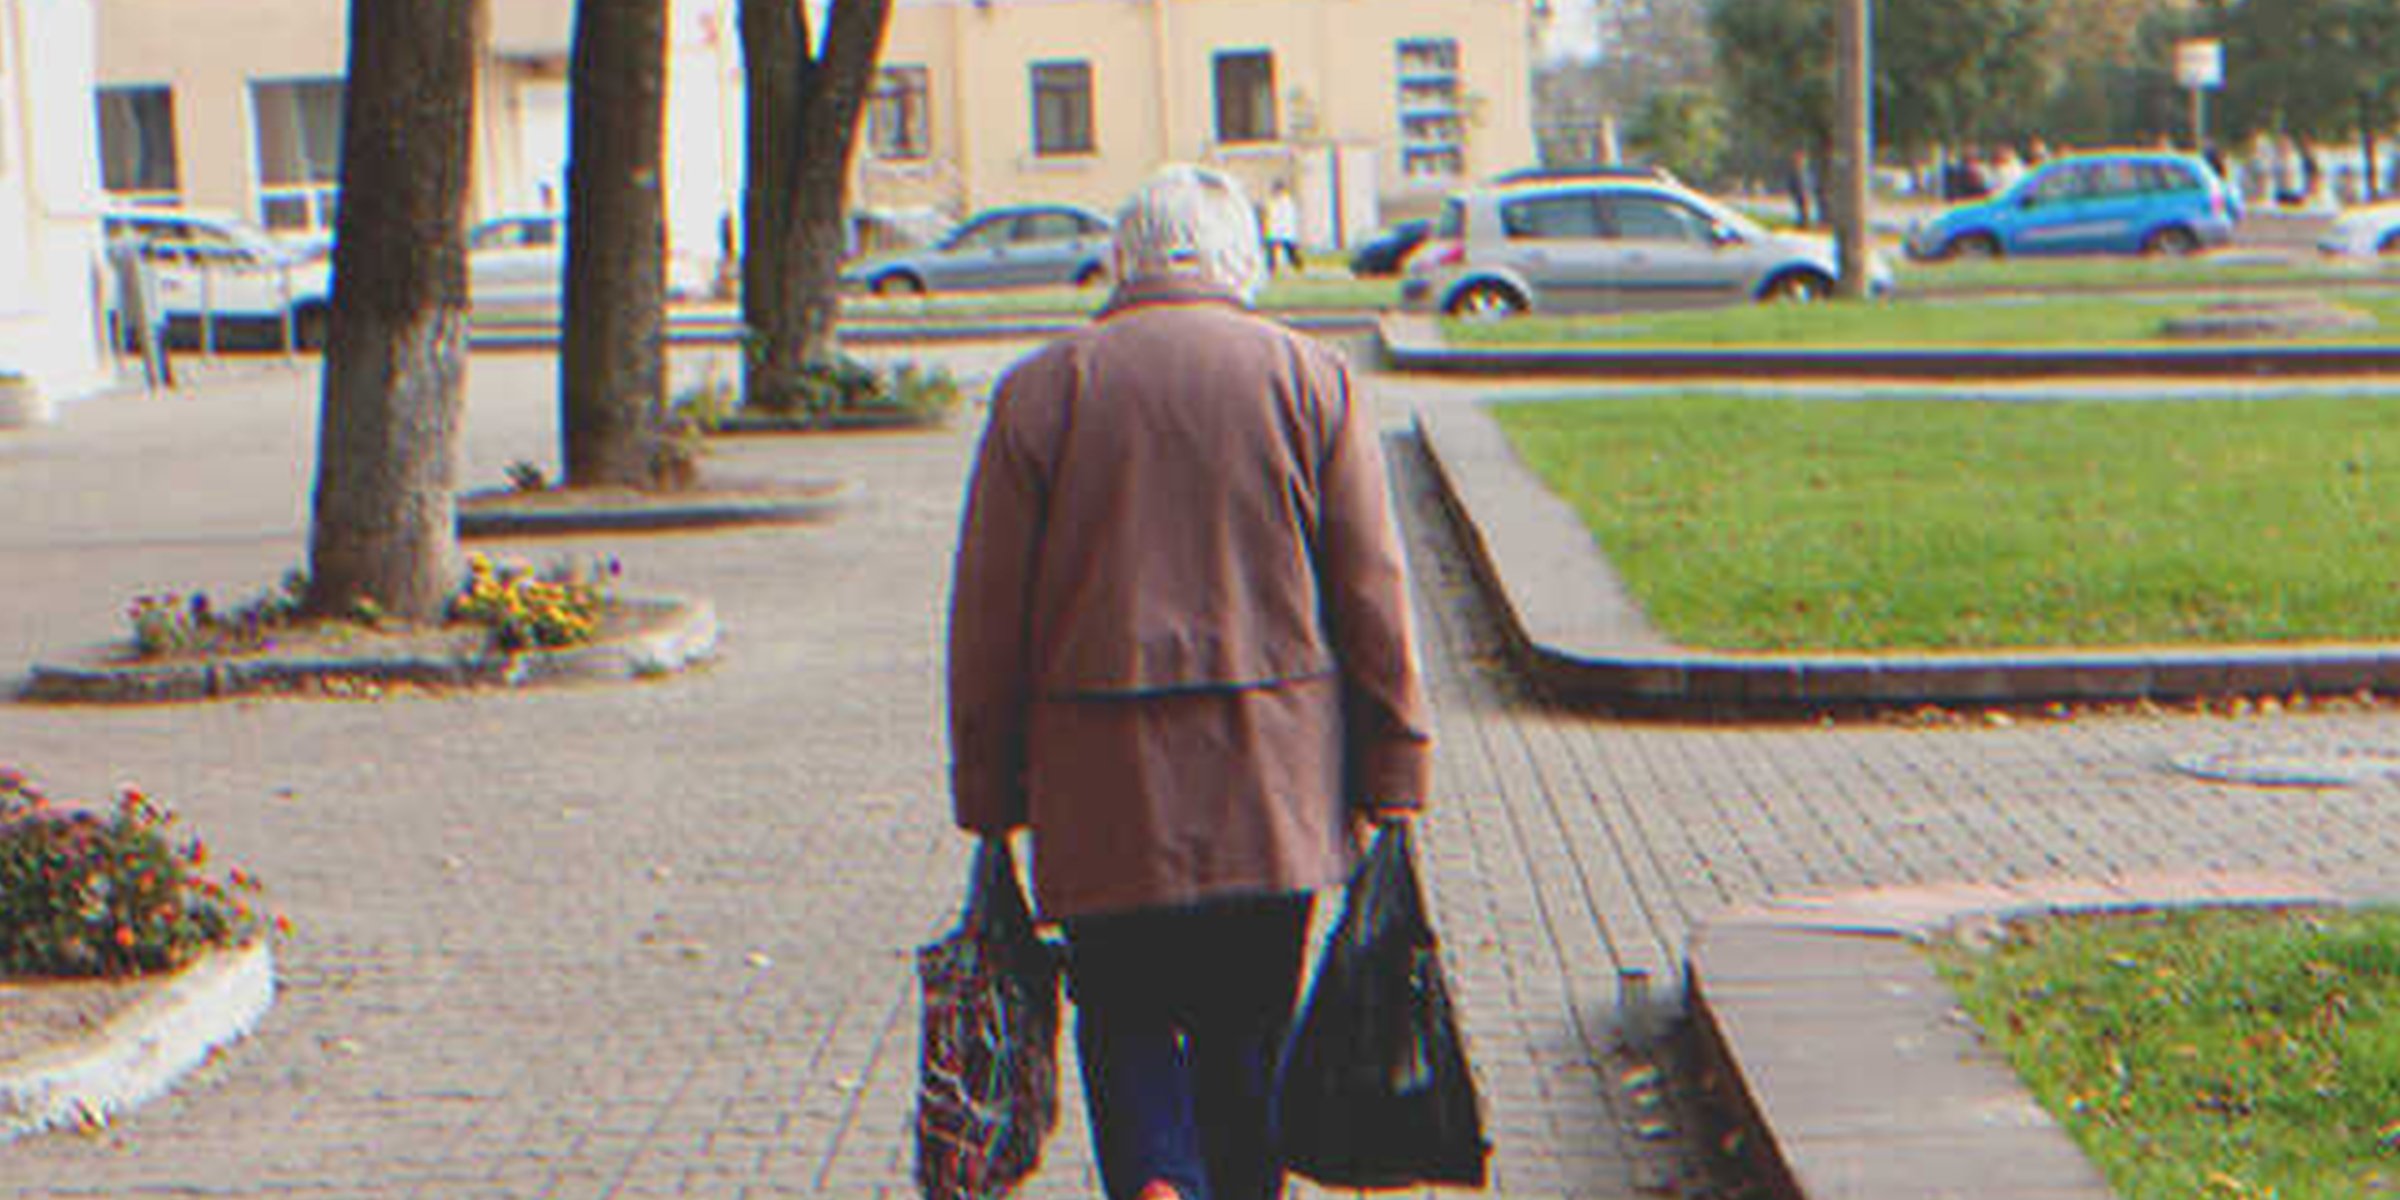 Old lady walking down the street | Source: Shutterstock